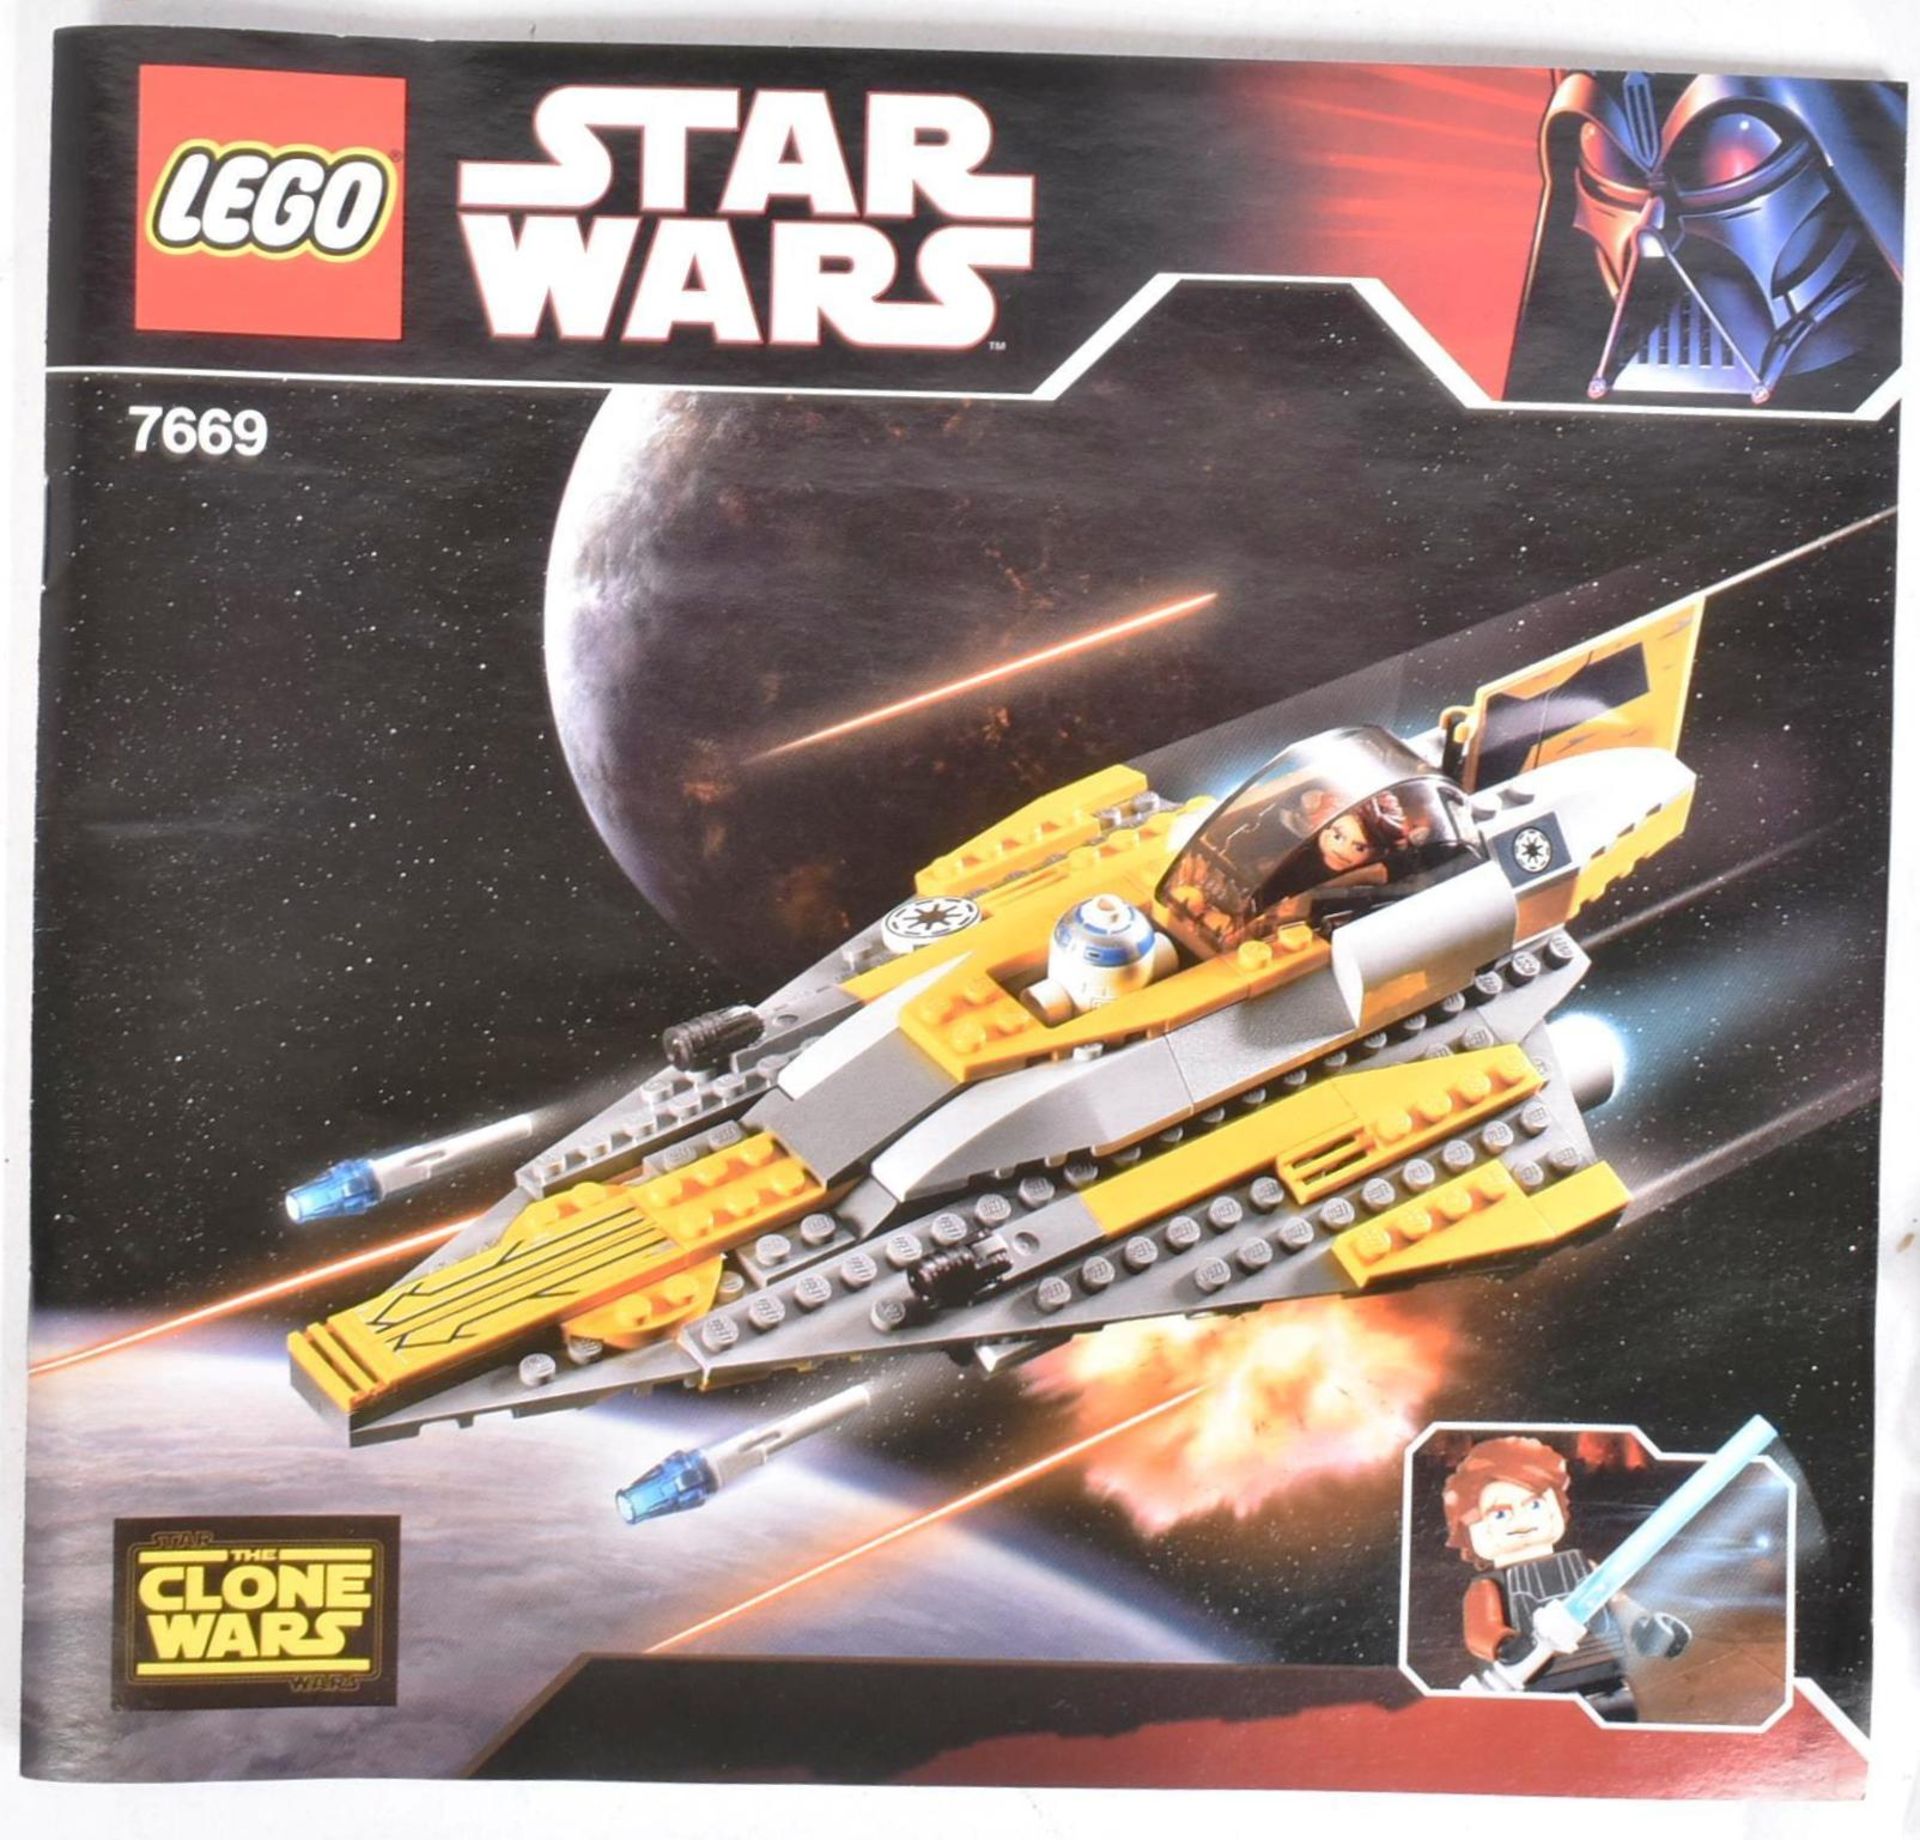 LEGO - STAR WARS - 7669 - ANAKIN'S JEDI STARFIGHTER - Image 5 of 5